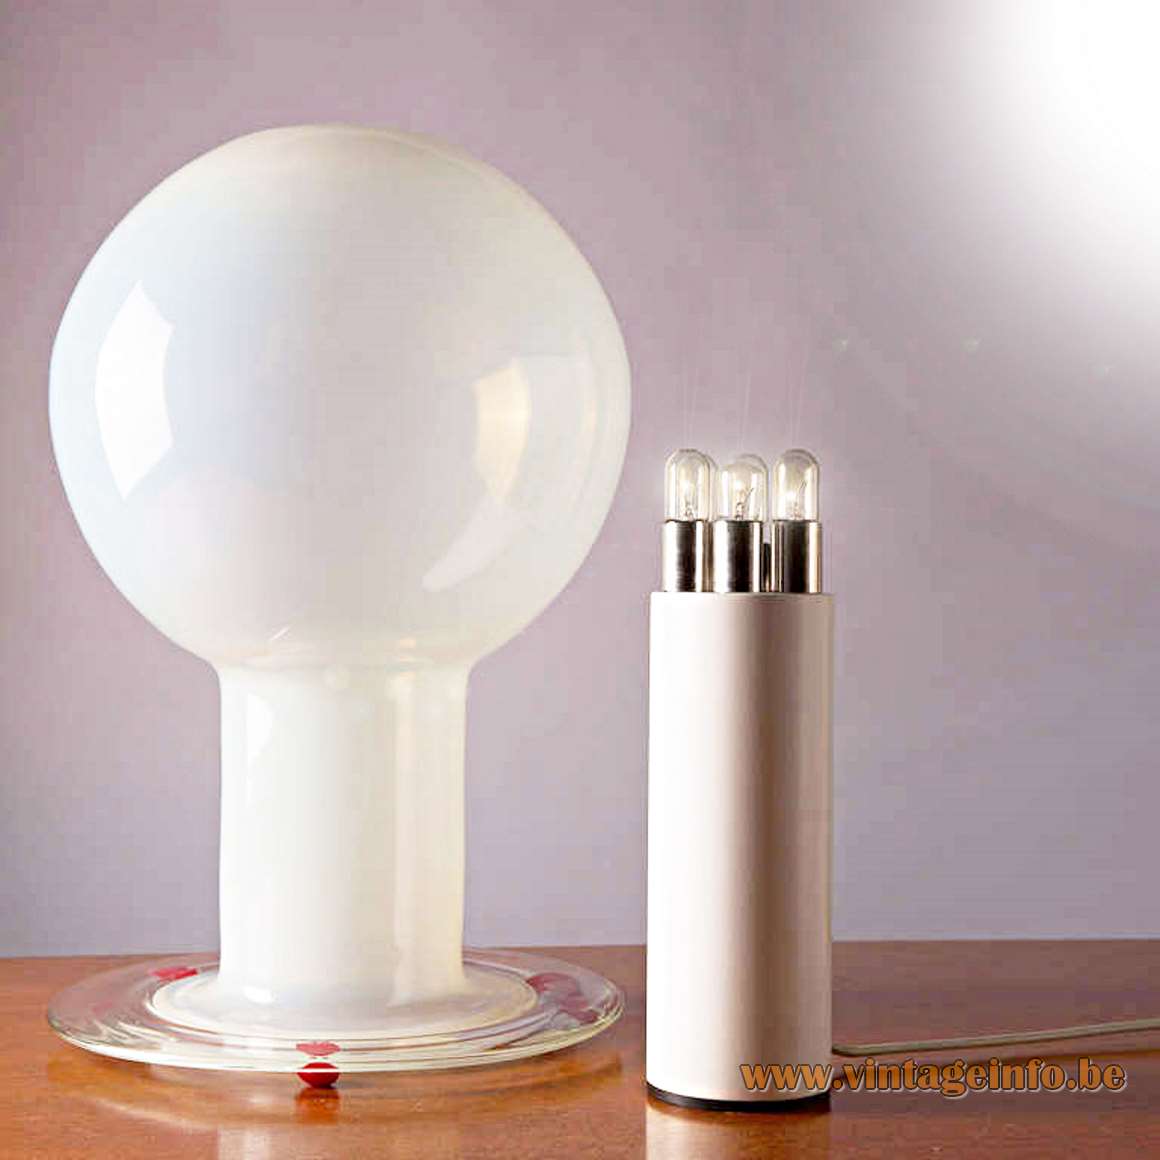 Renato Toso Nefele table lamp milky Murano glass globe lampshade Leucos Italy 1960s 1970s vintage design